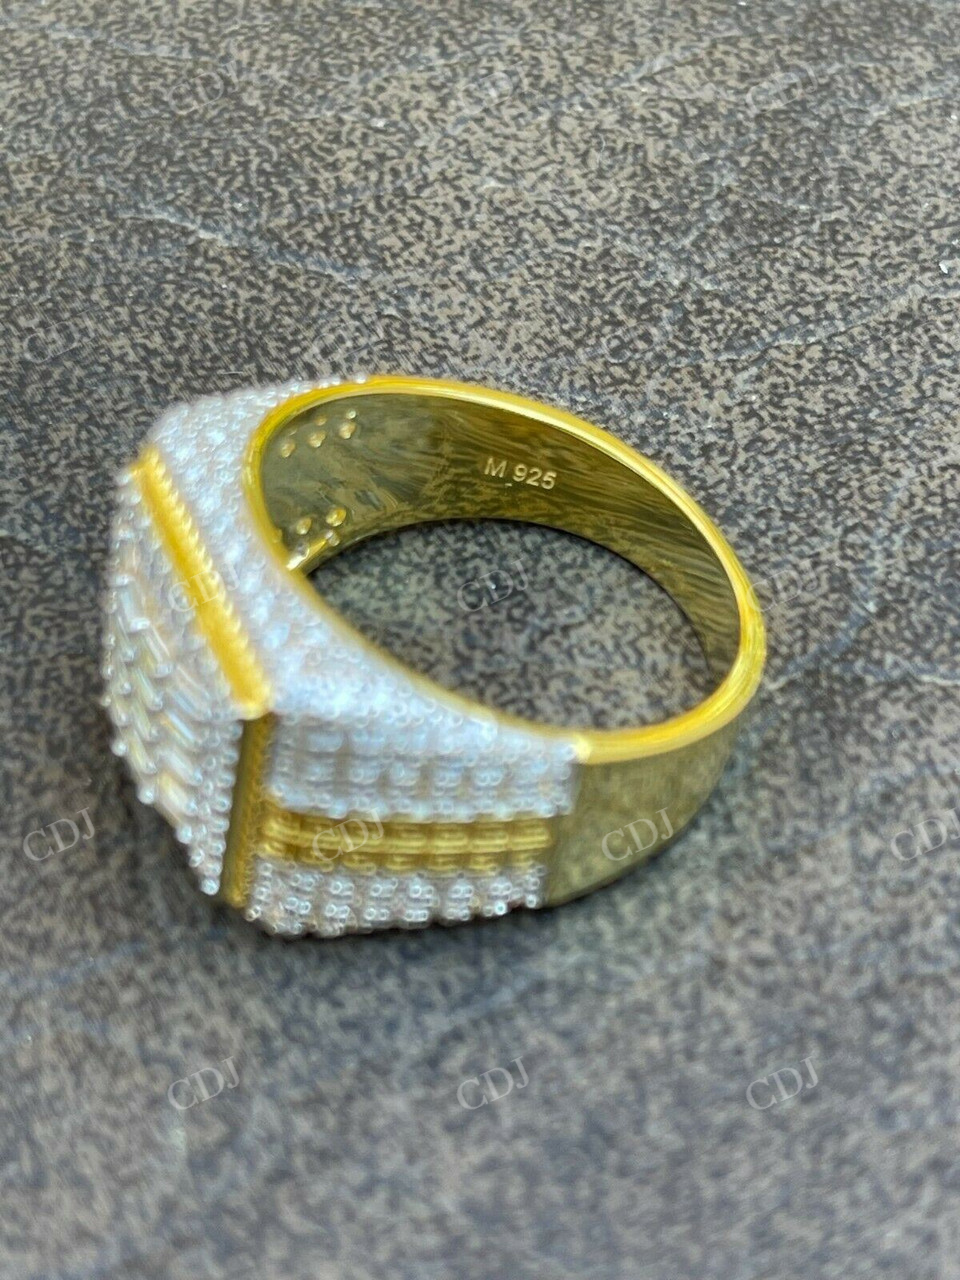 Alternating Round And Baguette Diamond Hip Hop Ring  customdiamjewel   